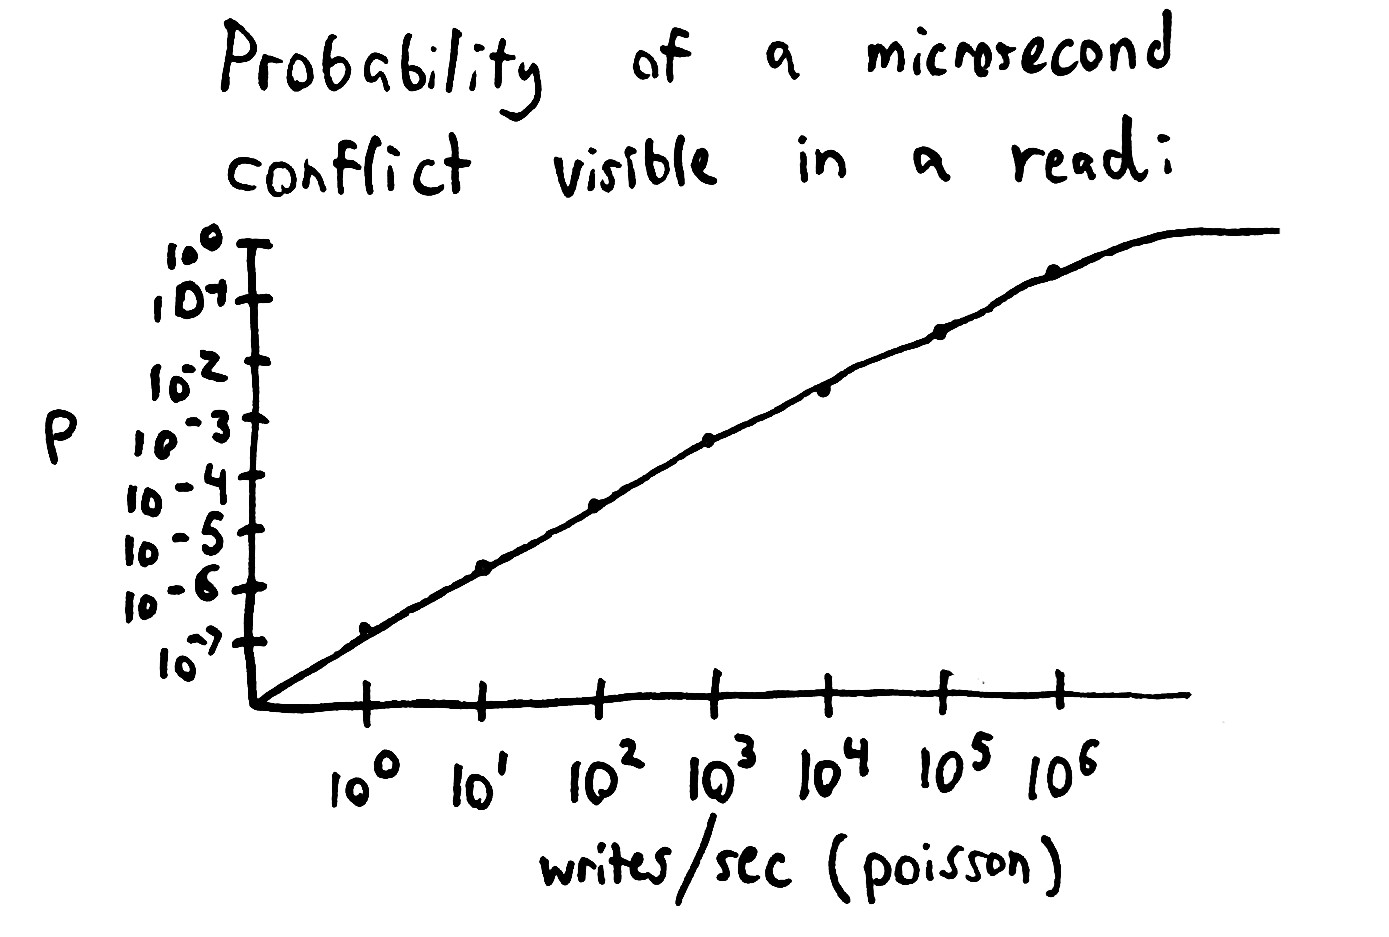 cassandra-ts-conflict-visible-chart.jpg